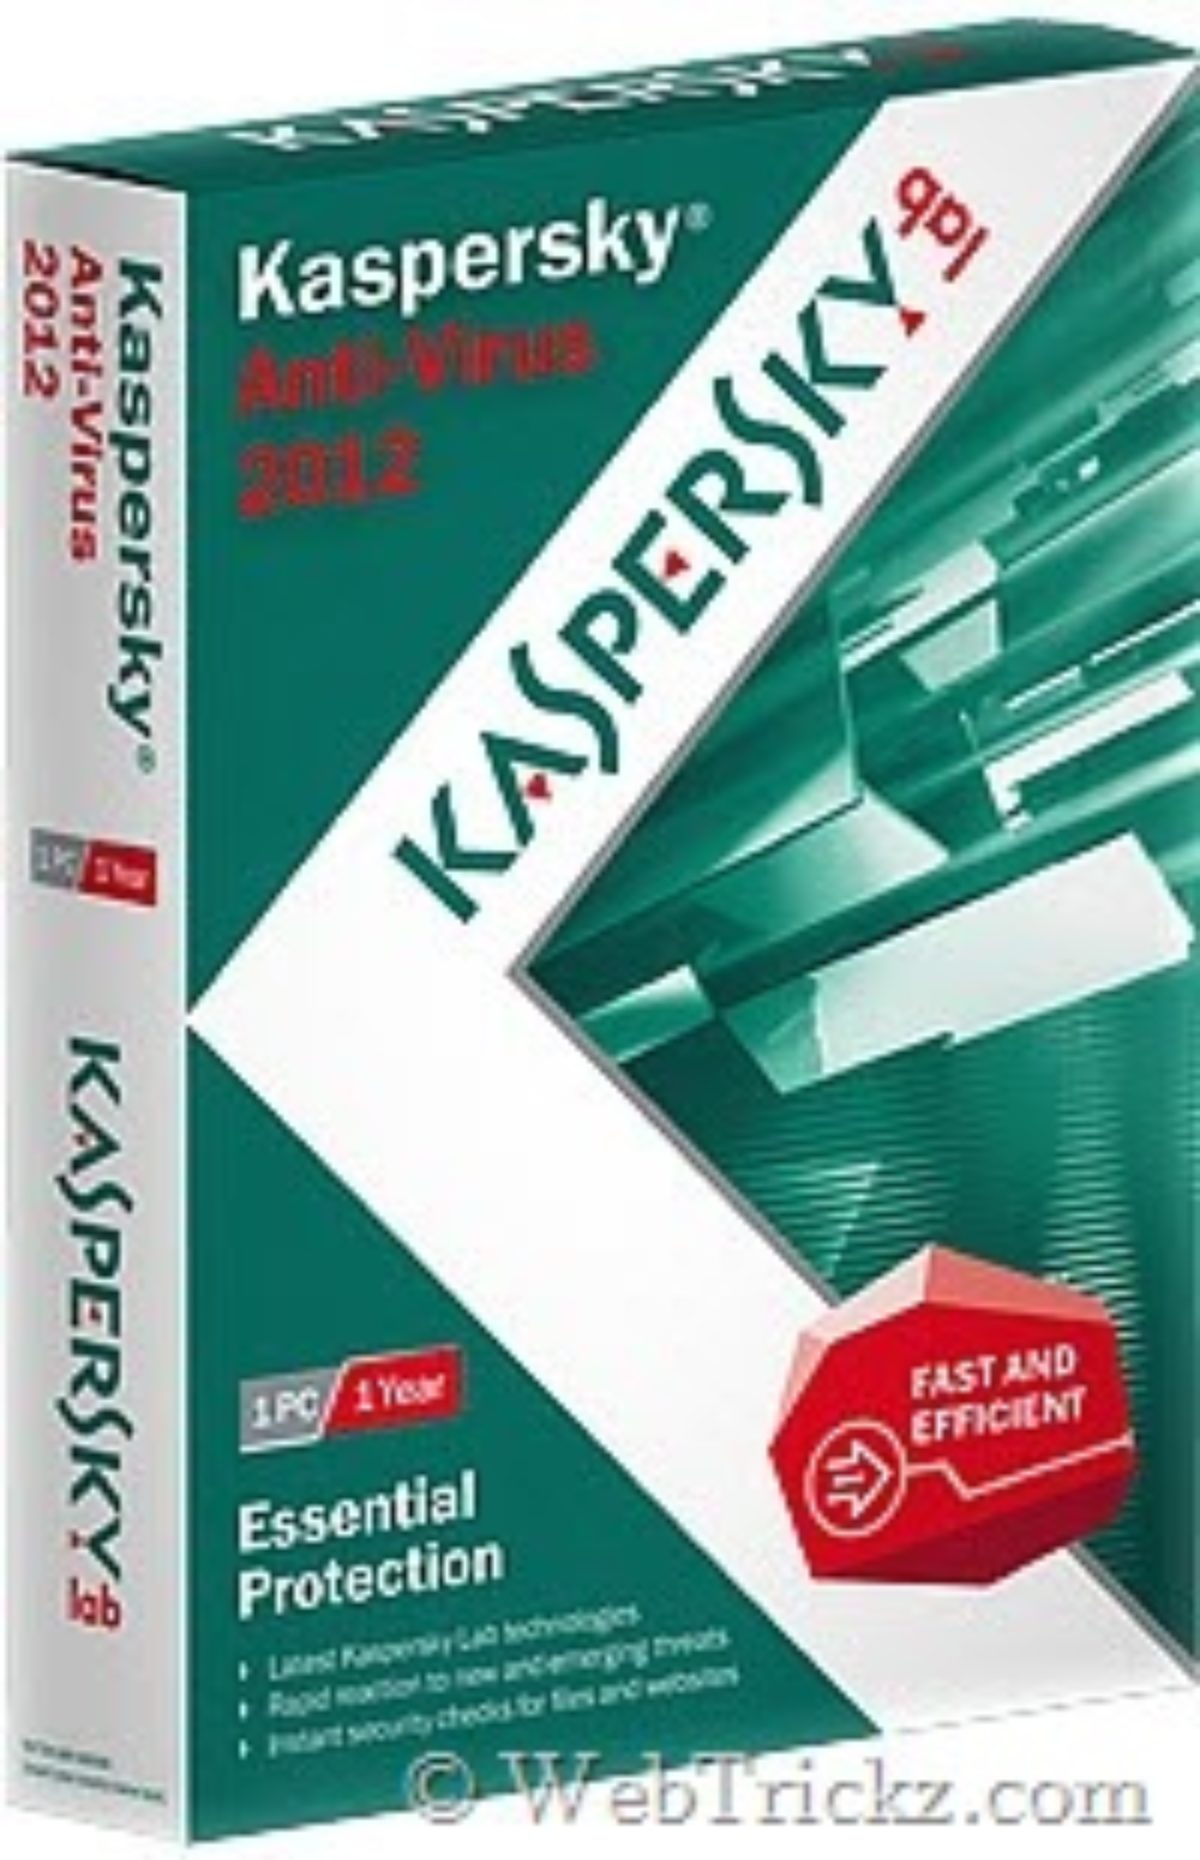 kaspersky antivirus free downloads 2012